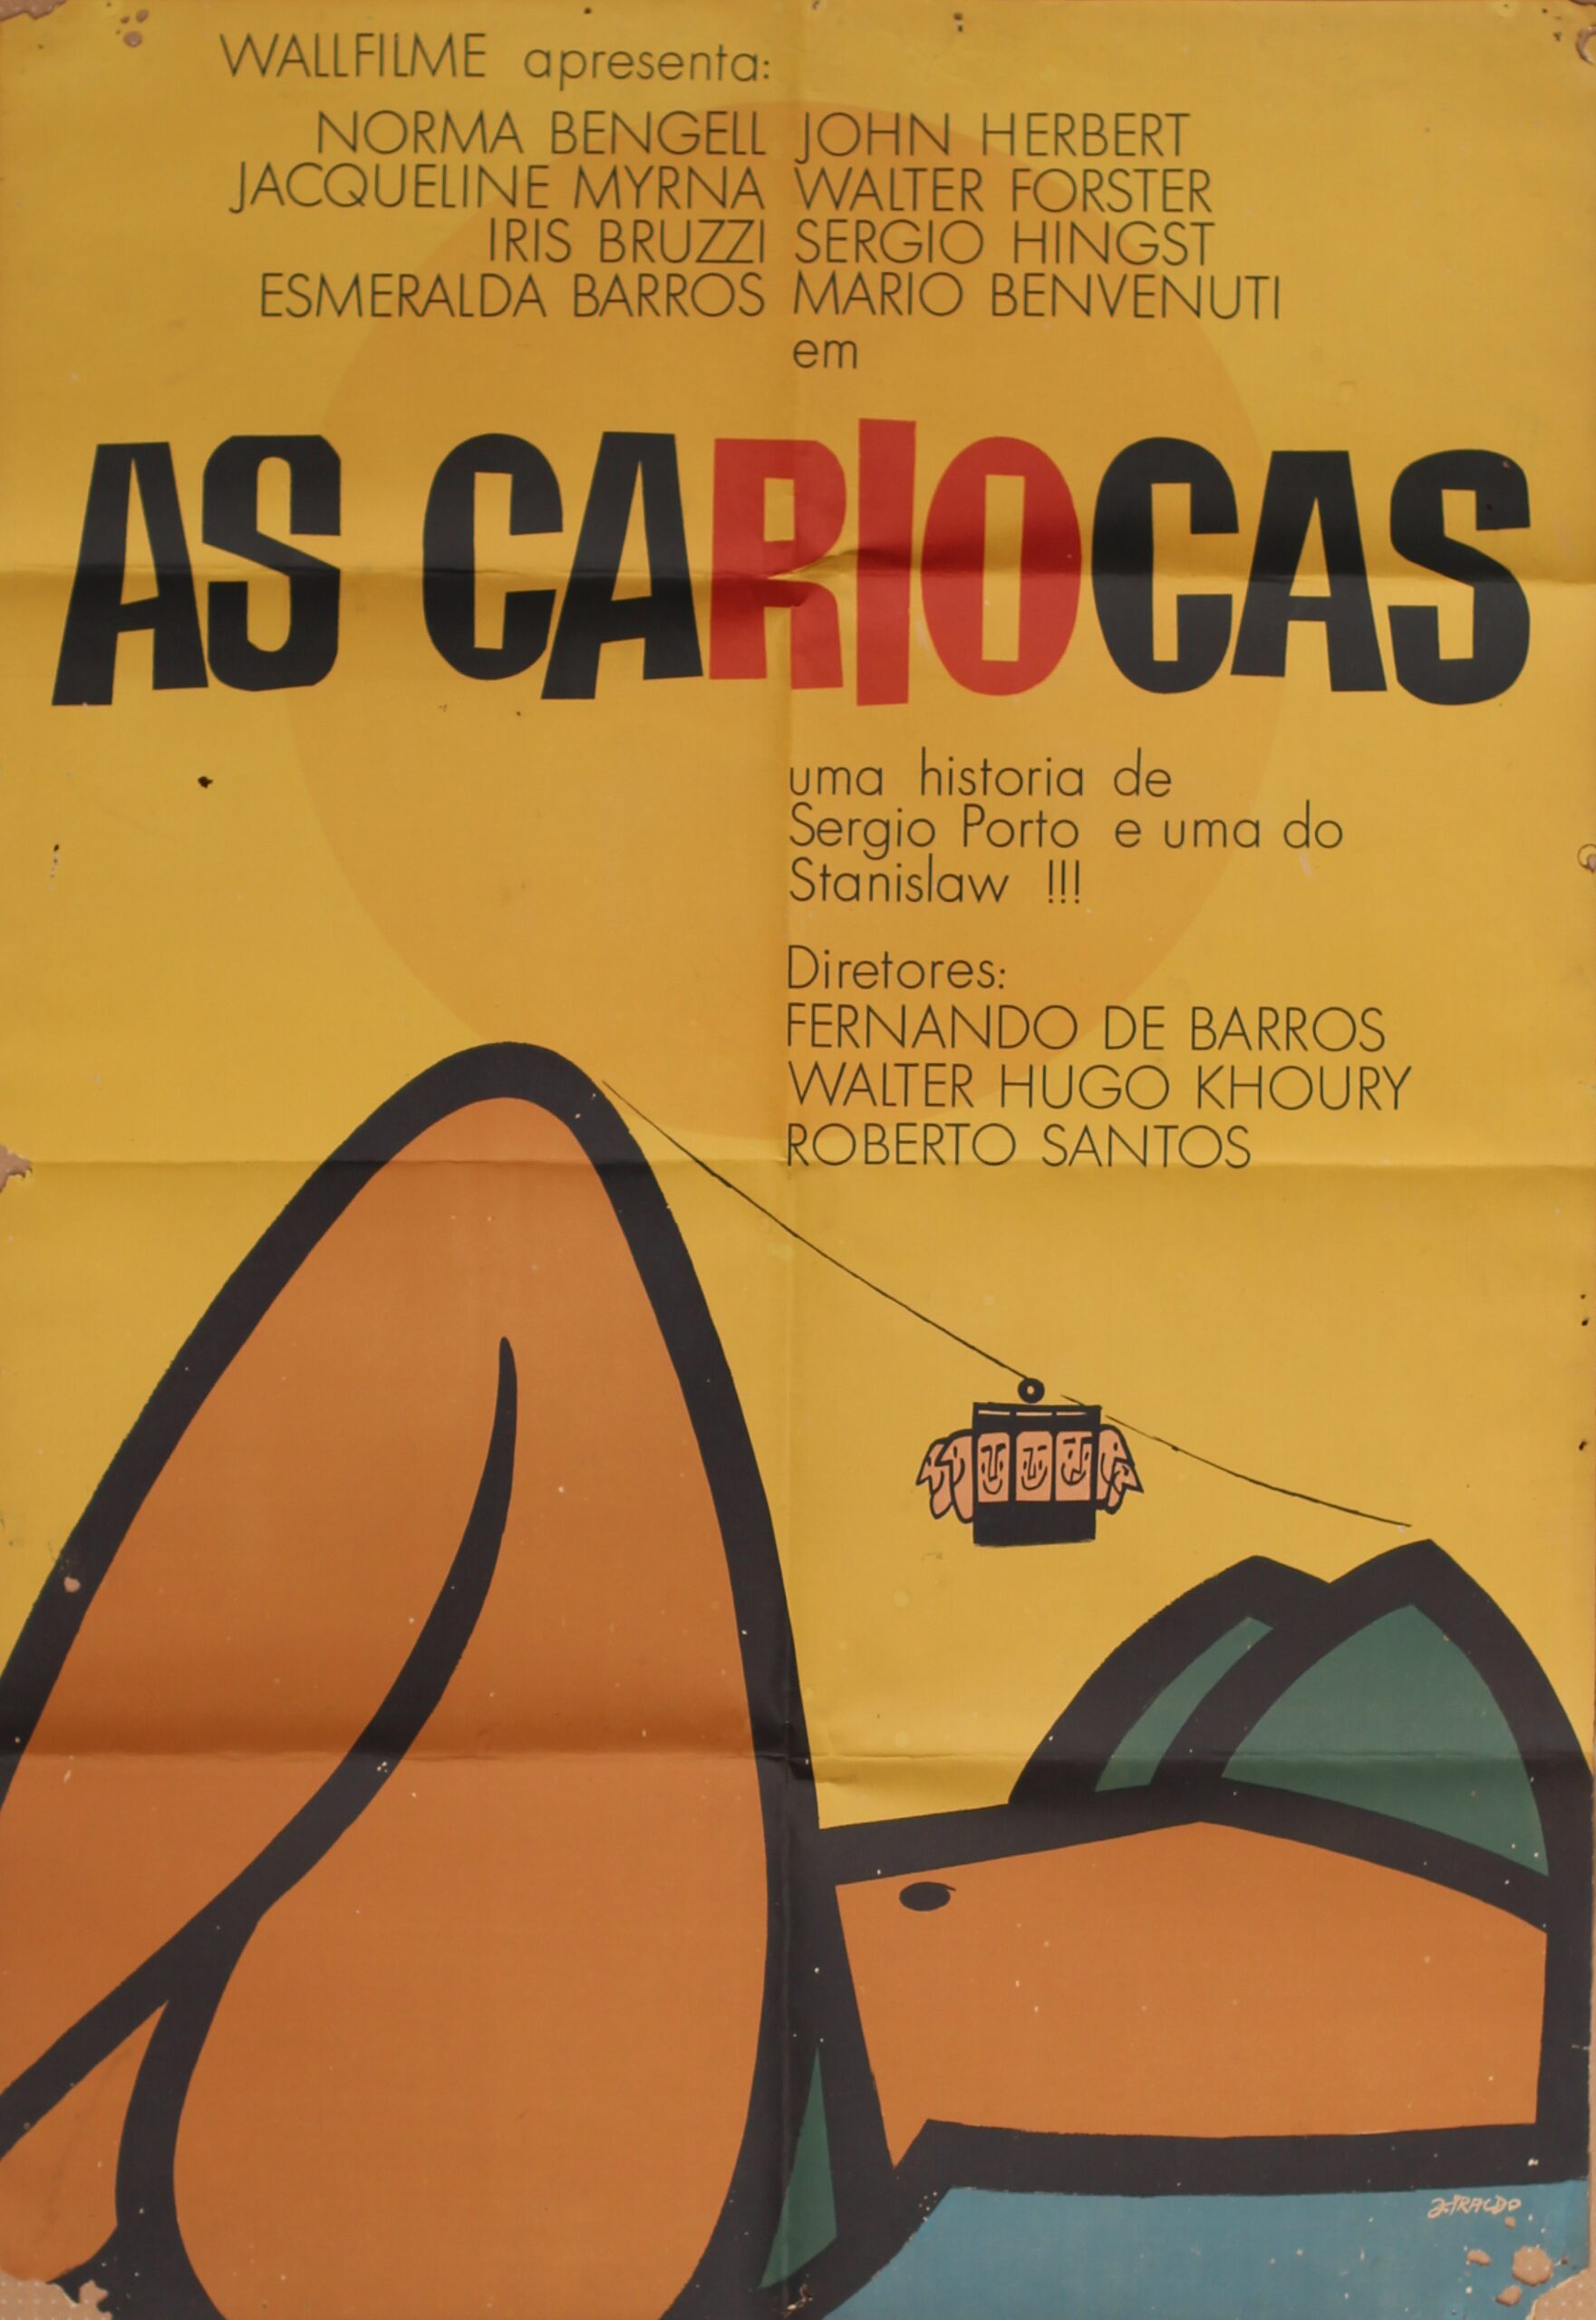 As cariocas (1966)